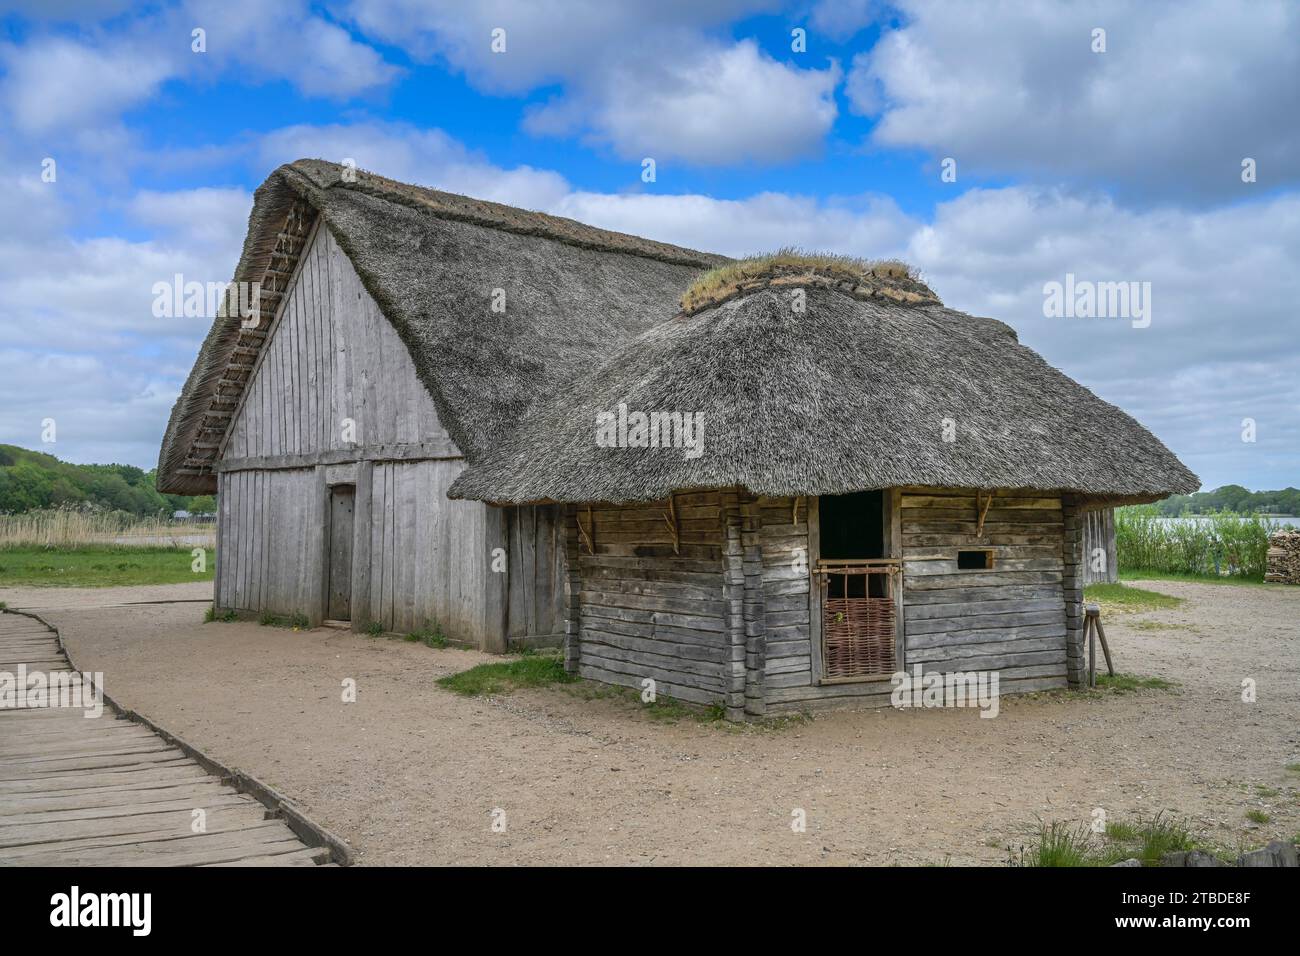 Maison historique en chaume, village, Viking Museum Haithabu, Schleswig, Schleswig-Holstein, Allemagne Banque D'Images